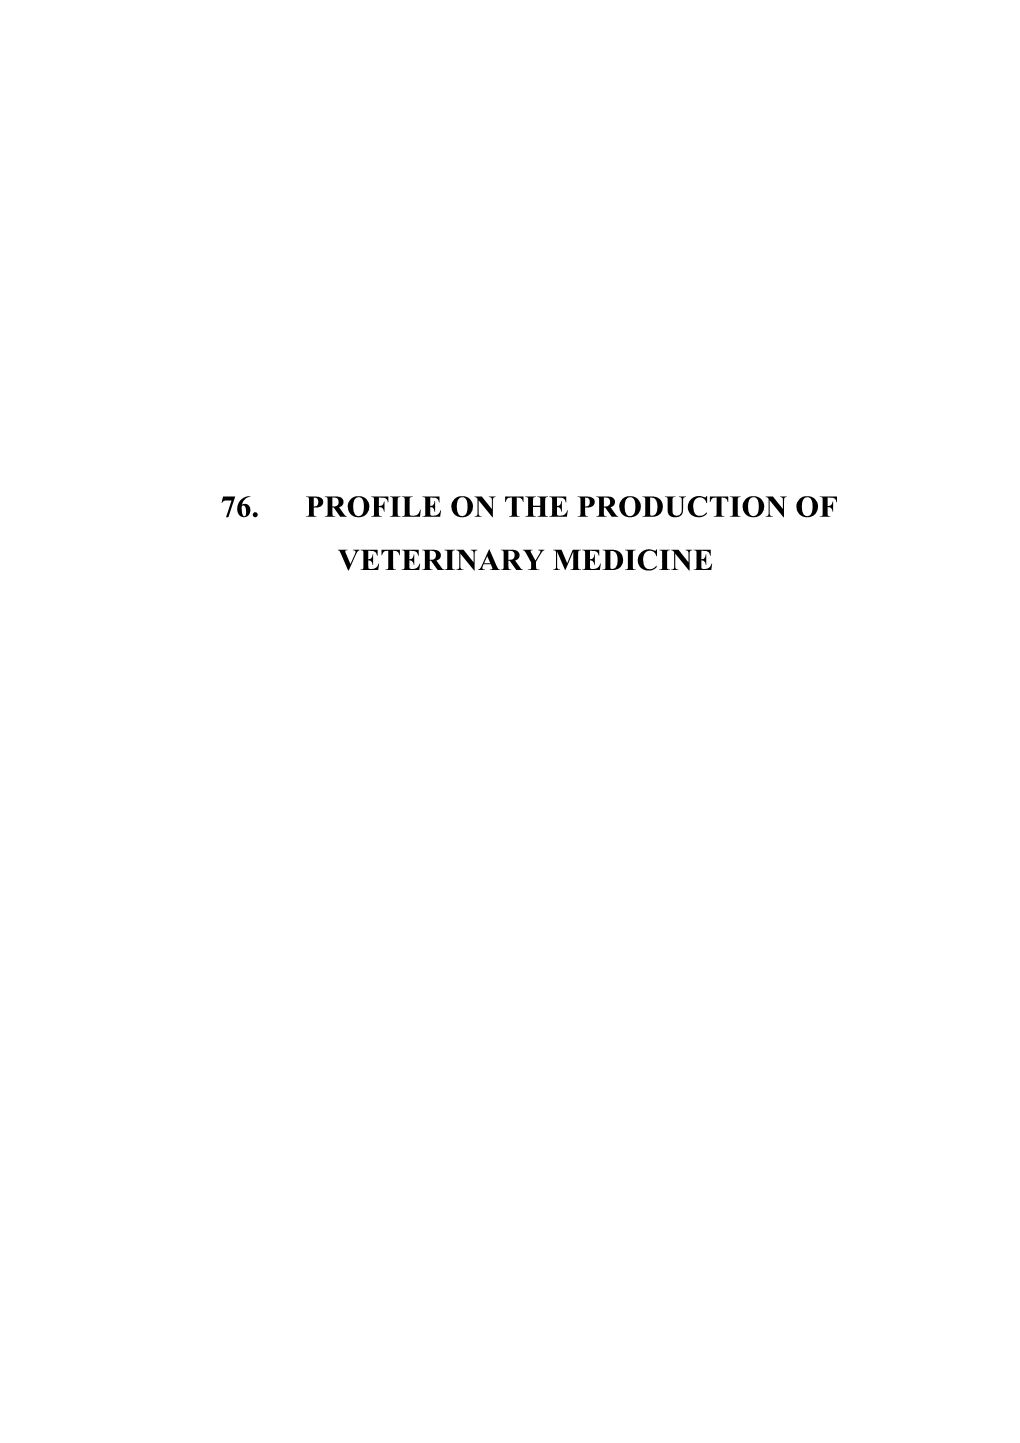 Profile on Veterinary Medicine